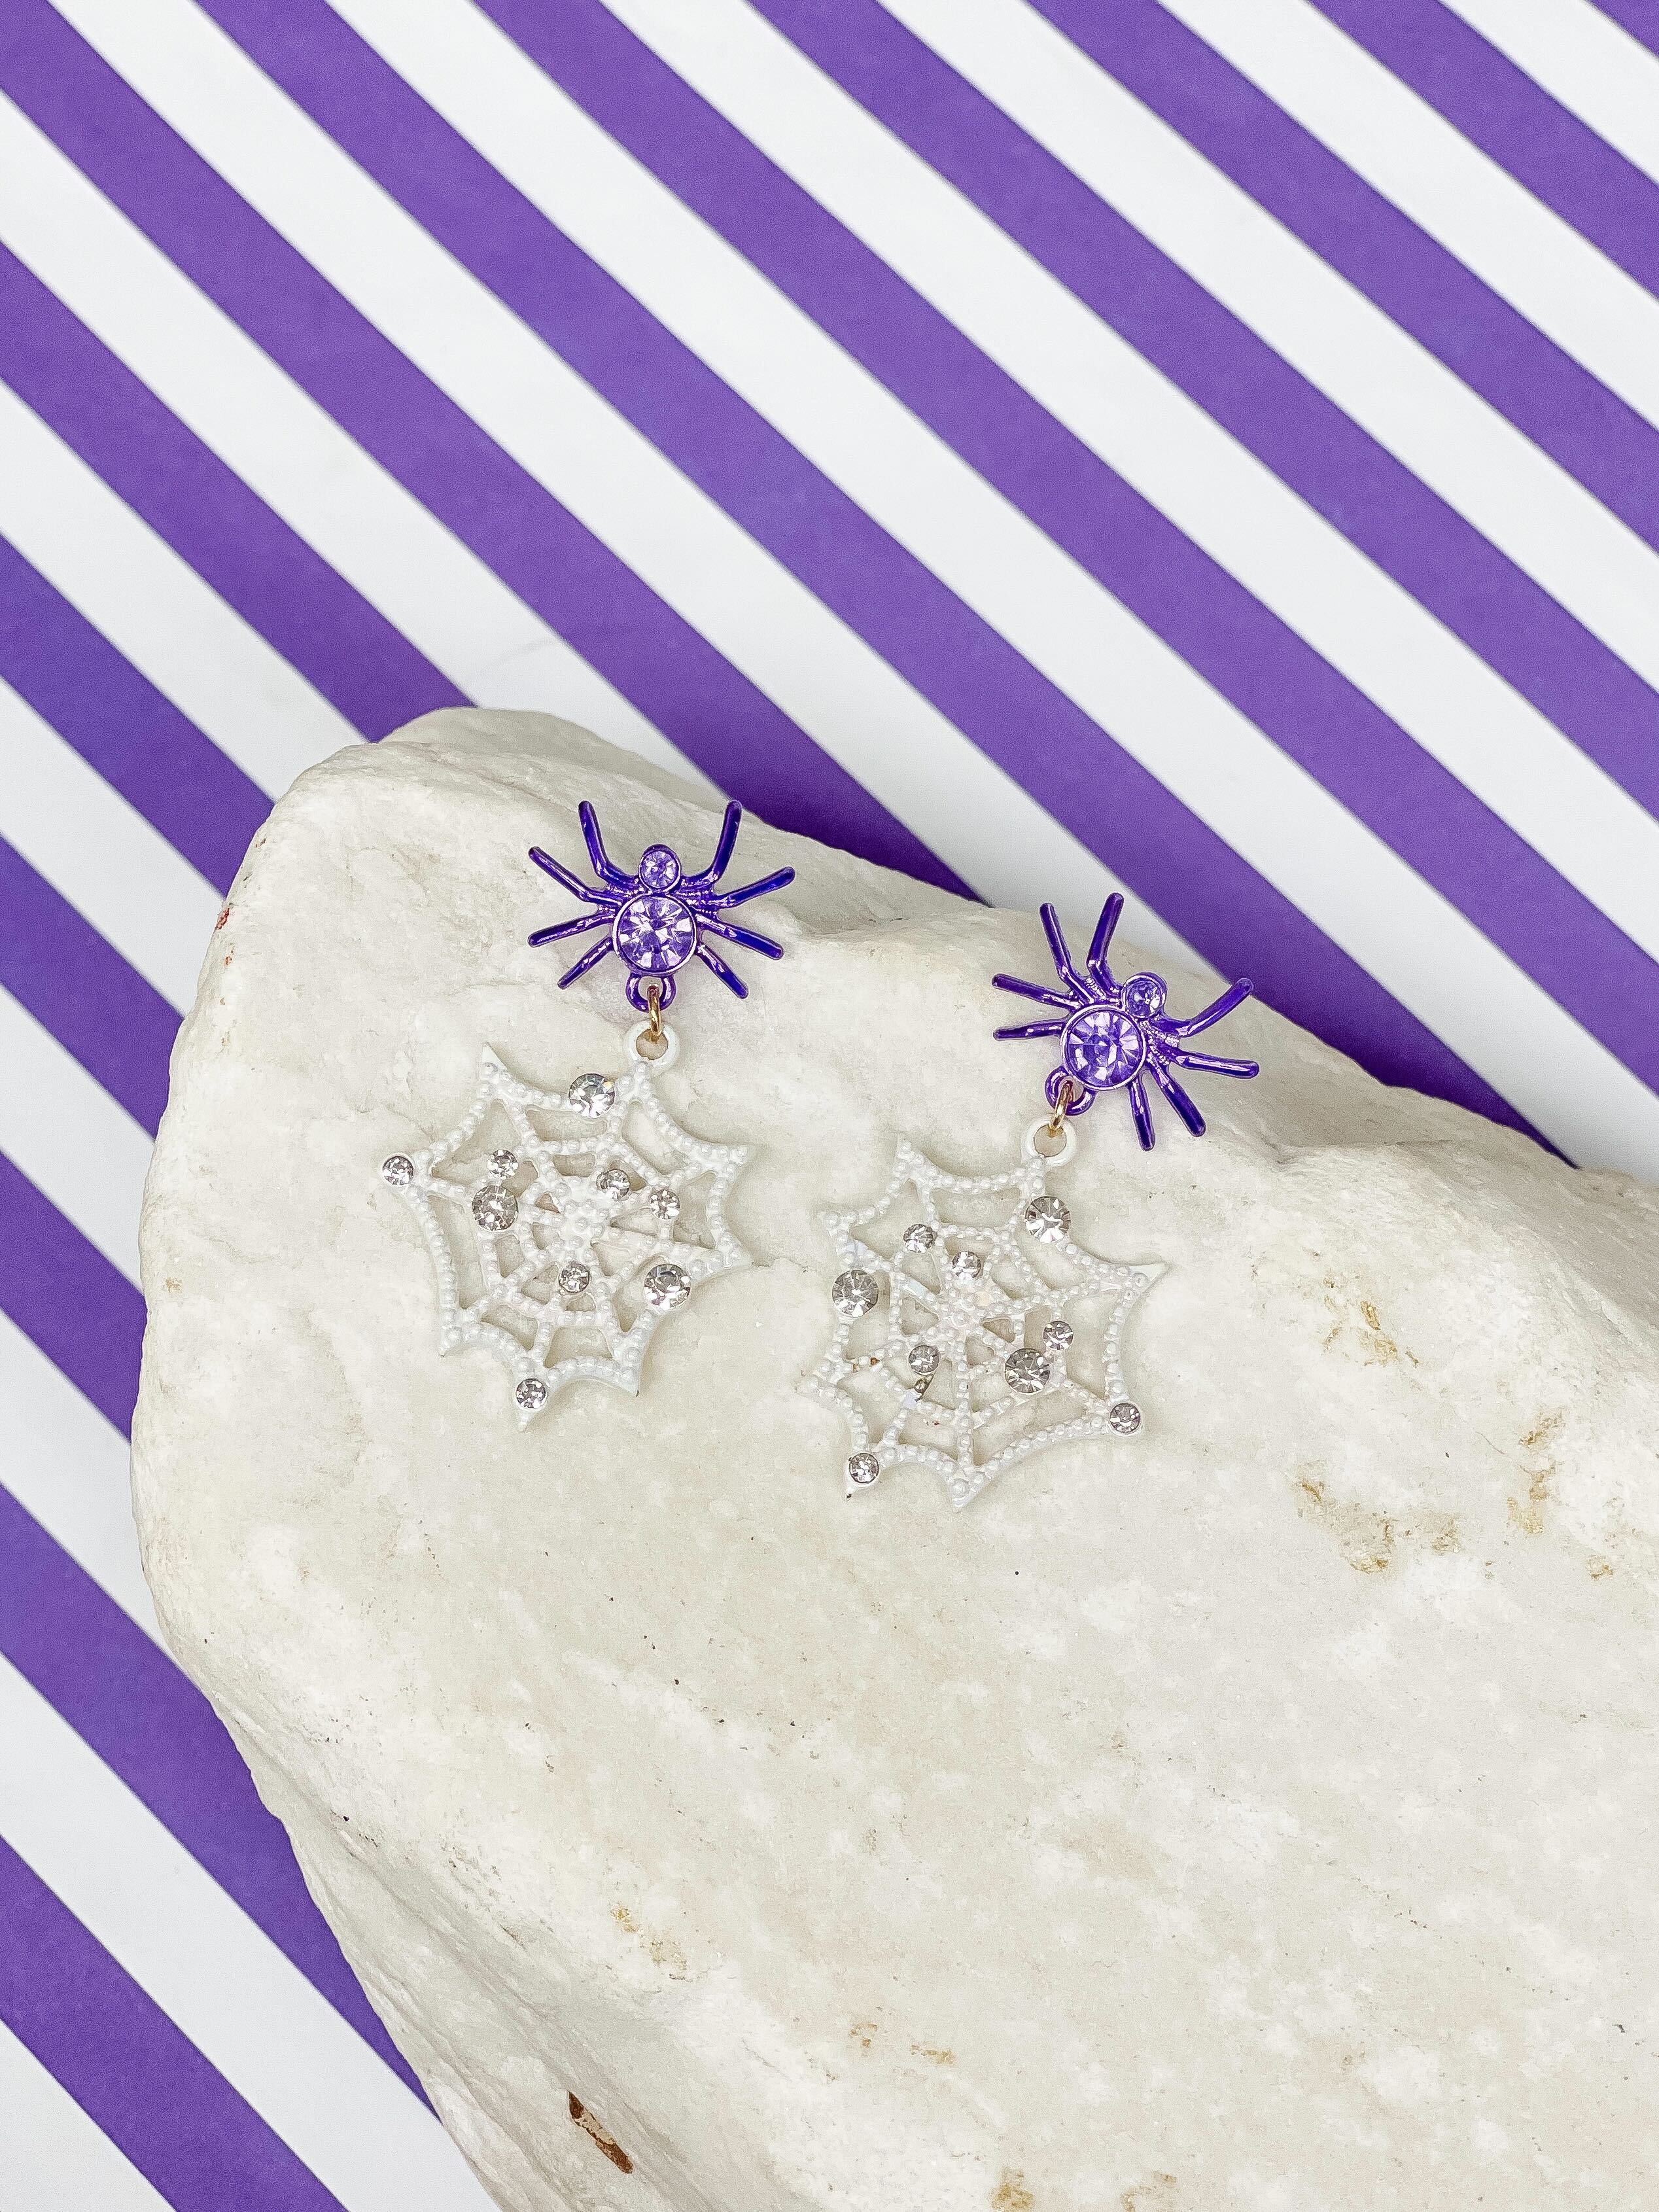 Purple Spider Cobweb Dangle Earrings